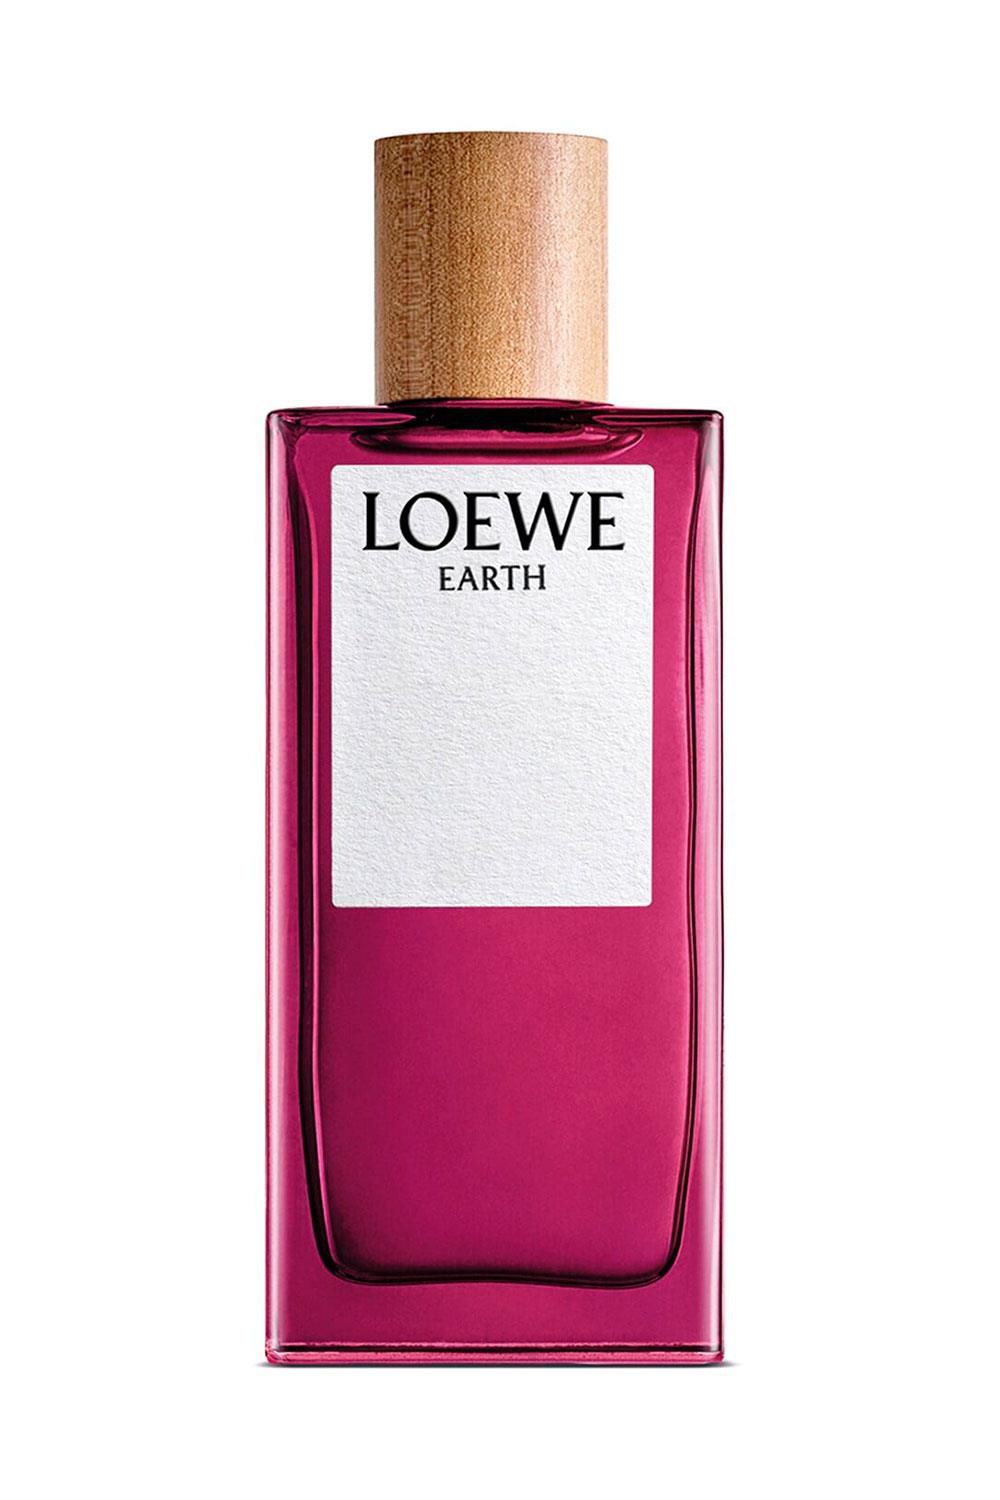 Earth, Loewe